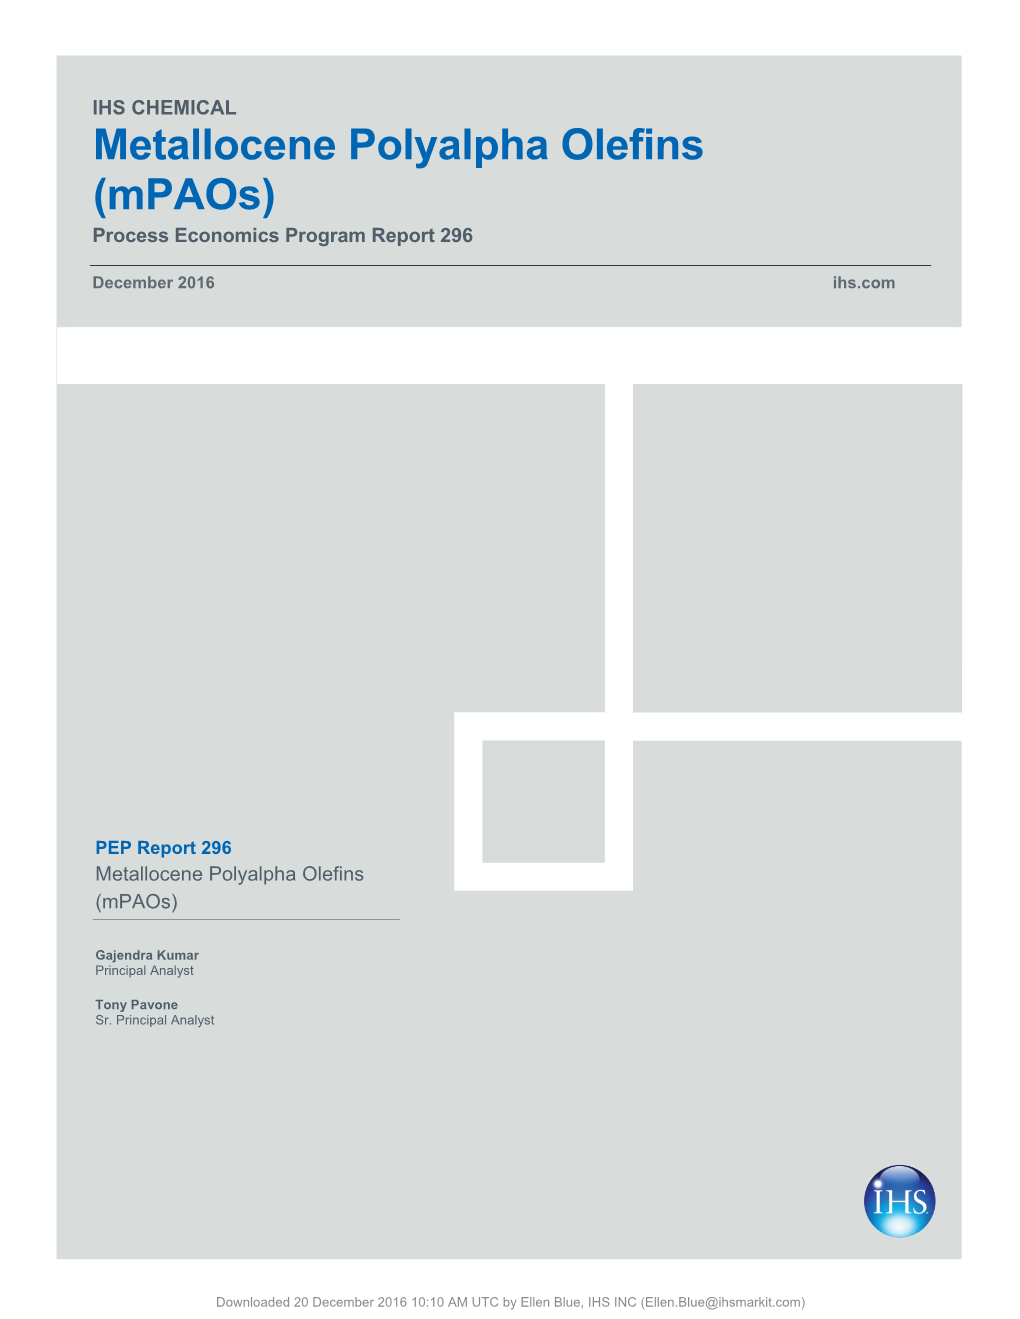 Metallocene Polyalpha Olefins (Mpaos) Process Economics Program Report 296